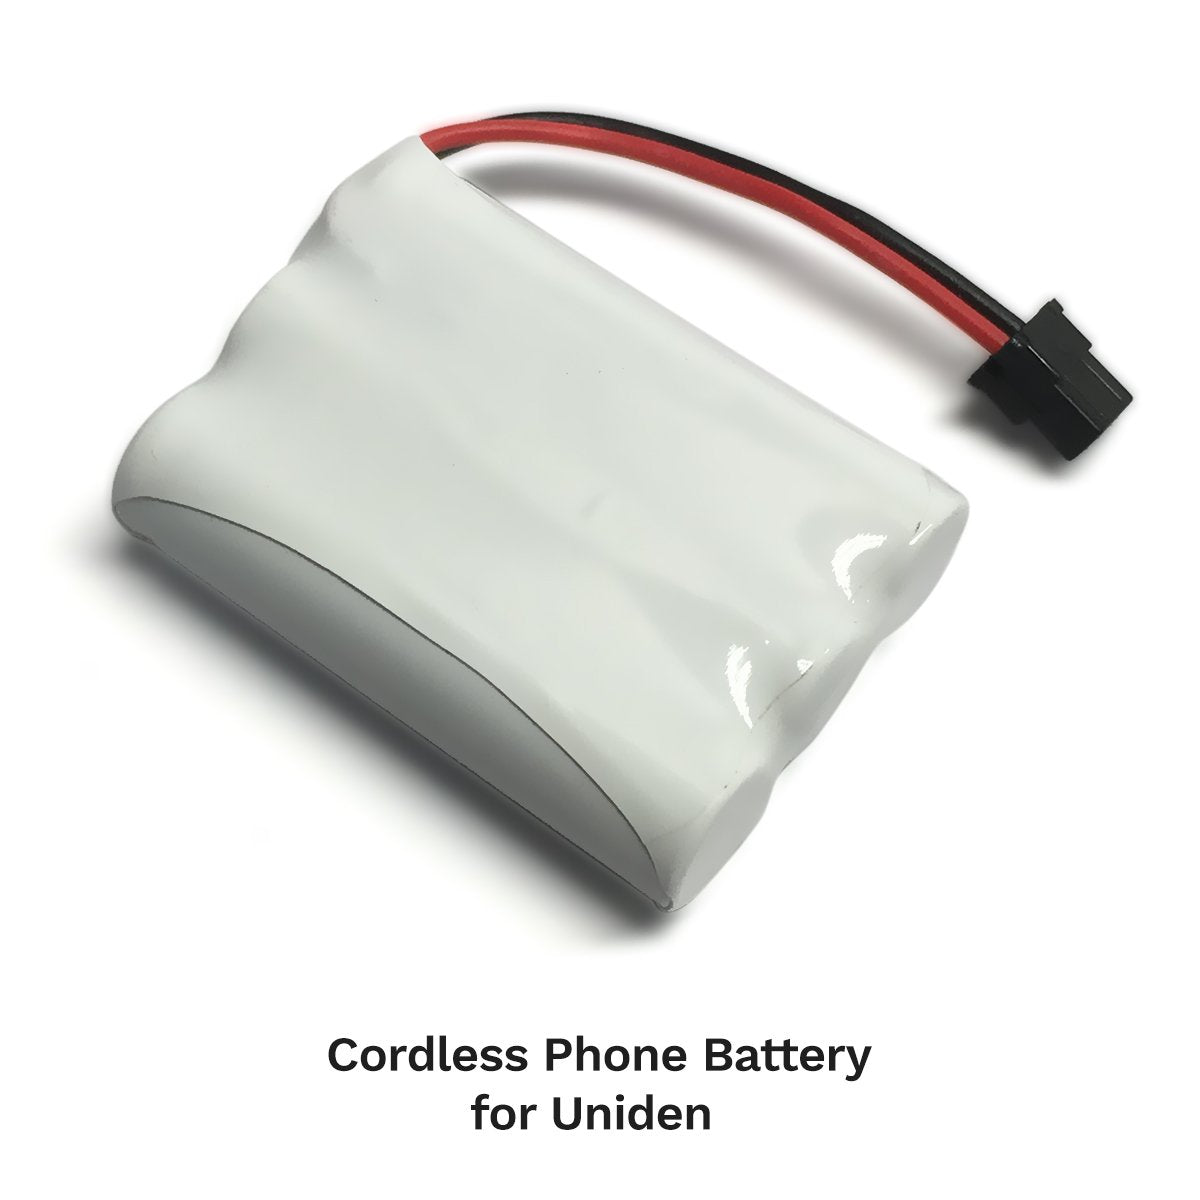 Uniden DCT756 Cordless Phone Battery